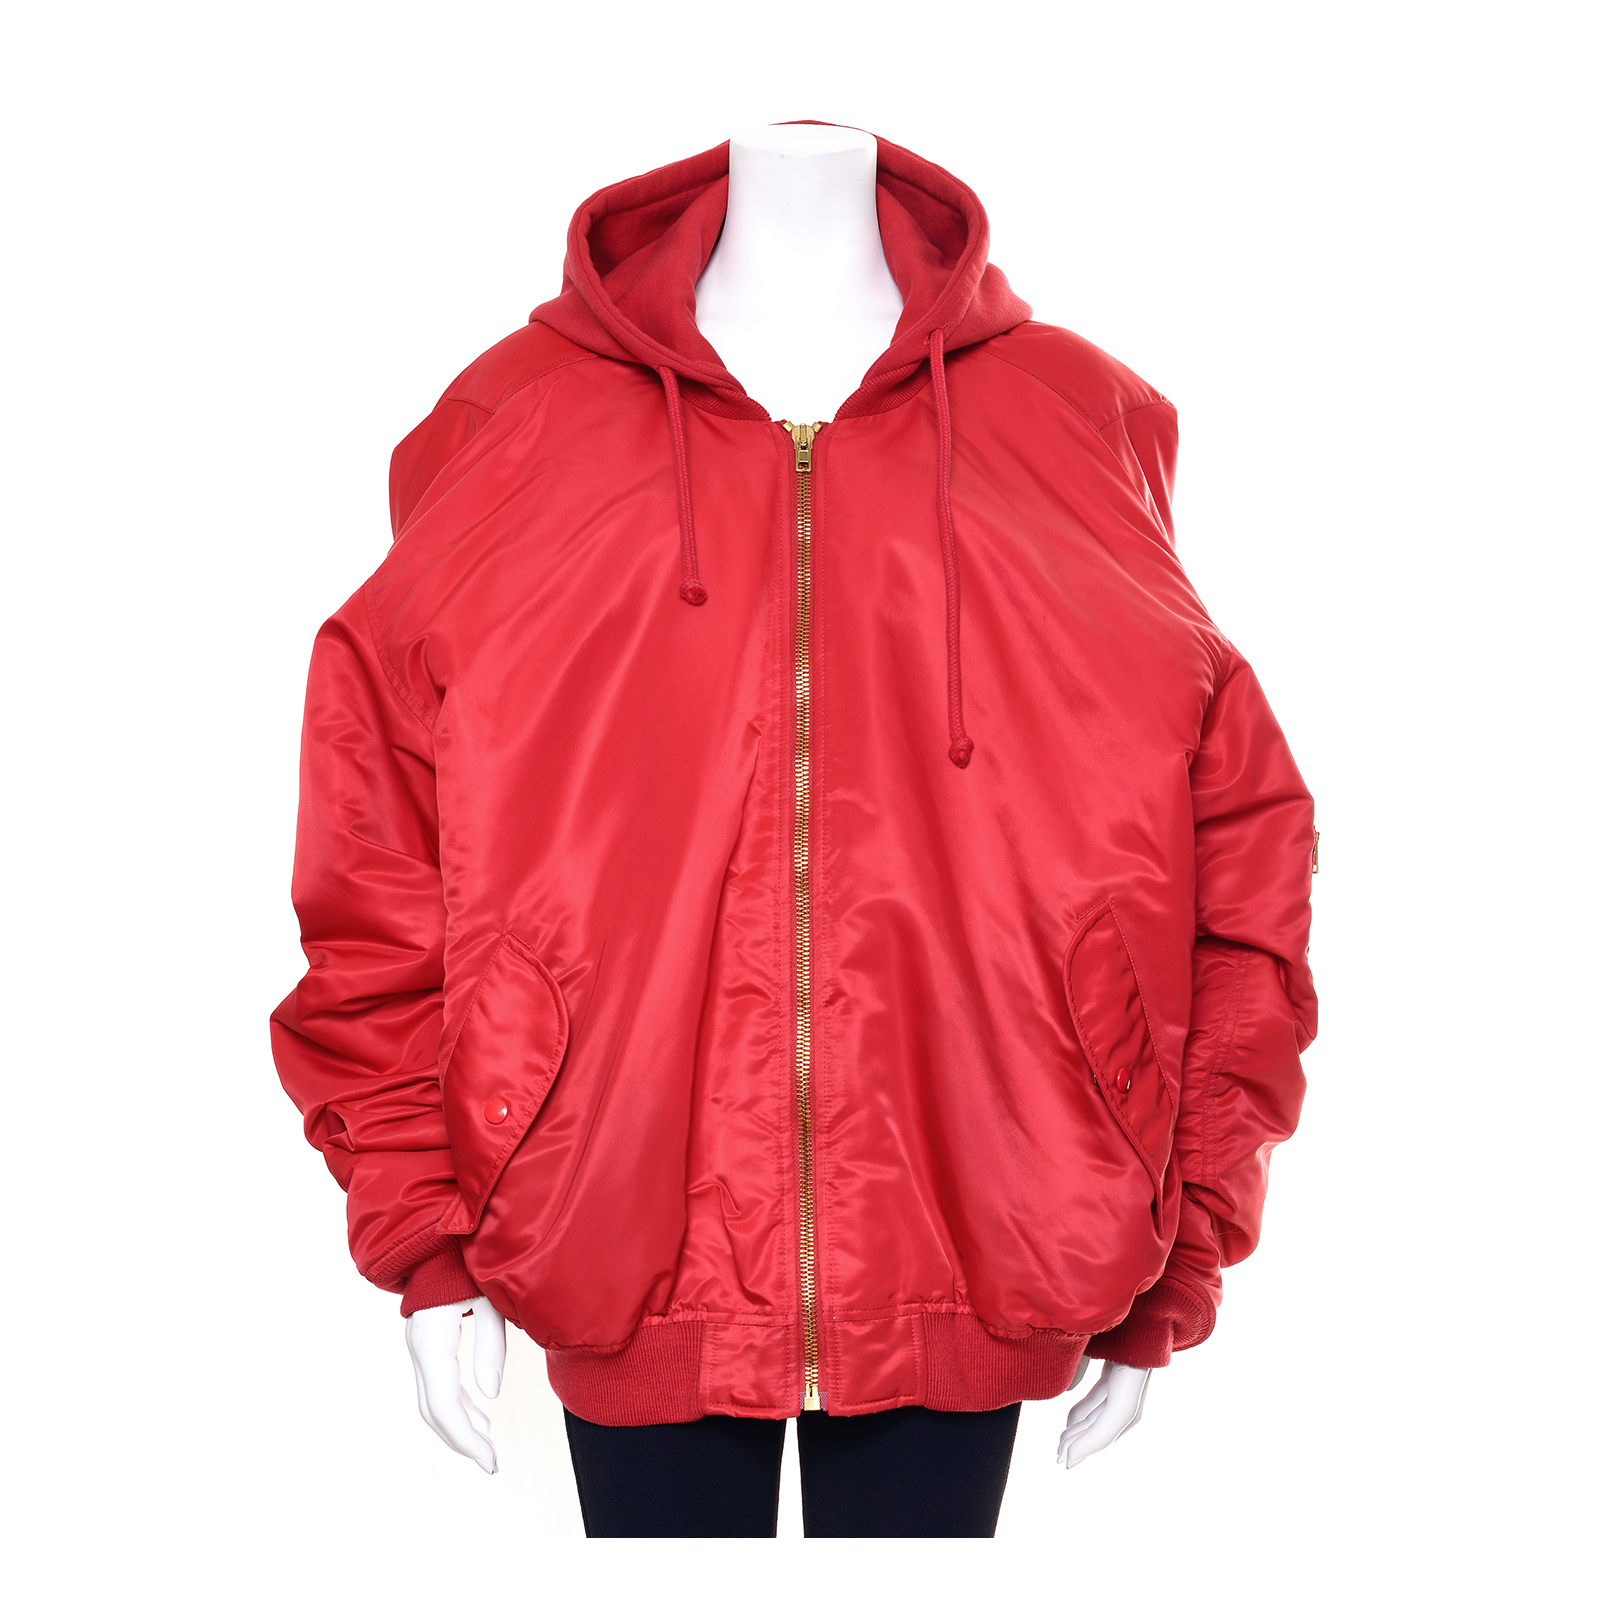 Vêtements Red Hooded Bomber Jacket